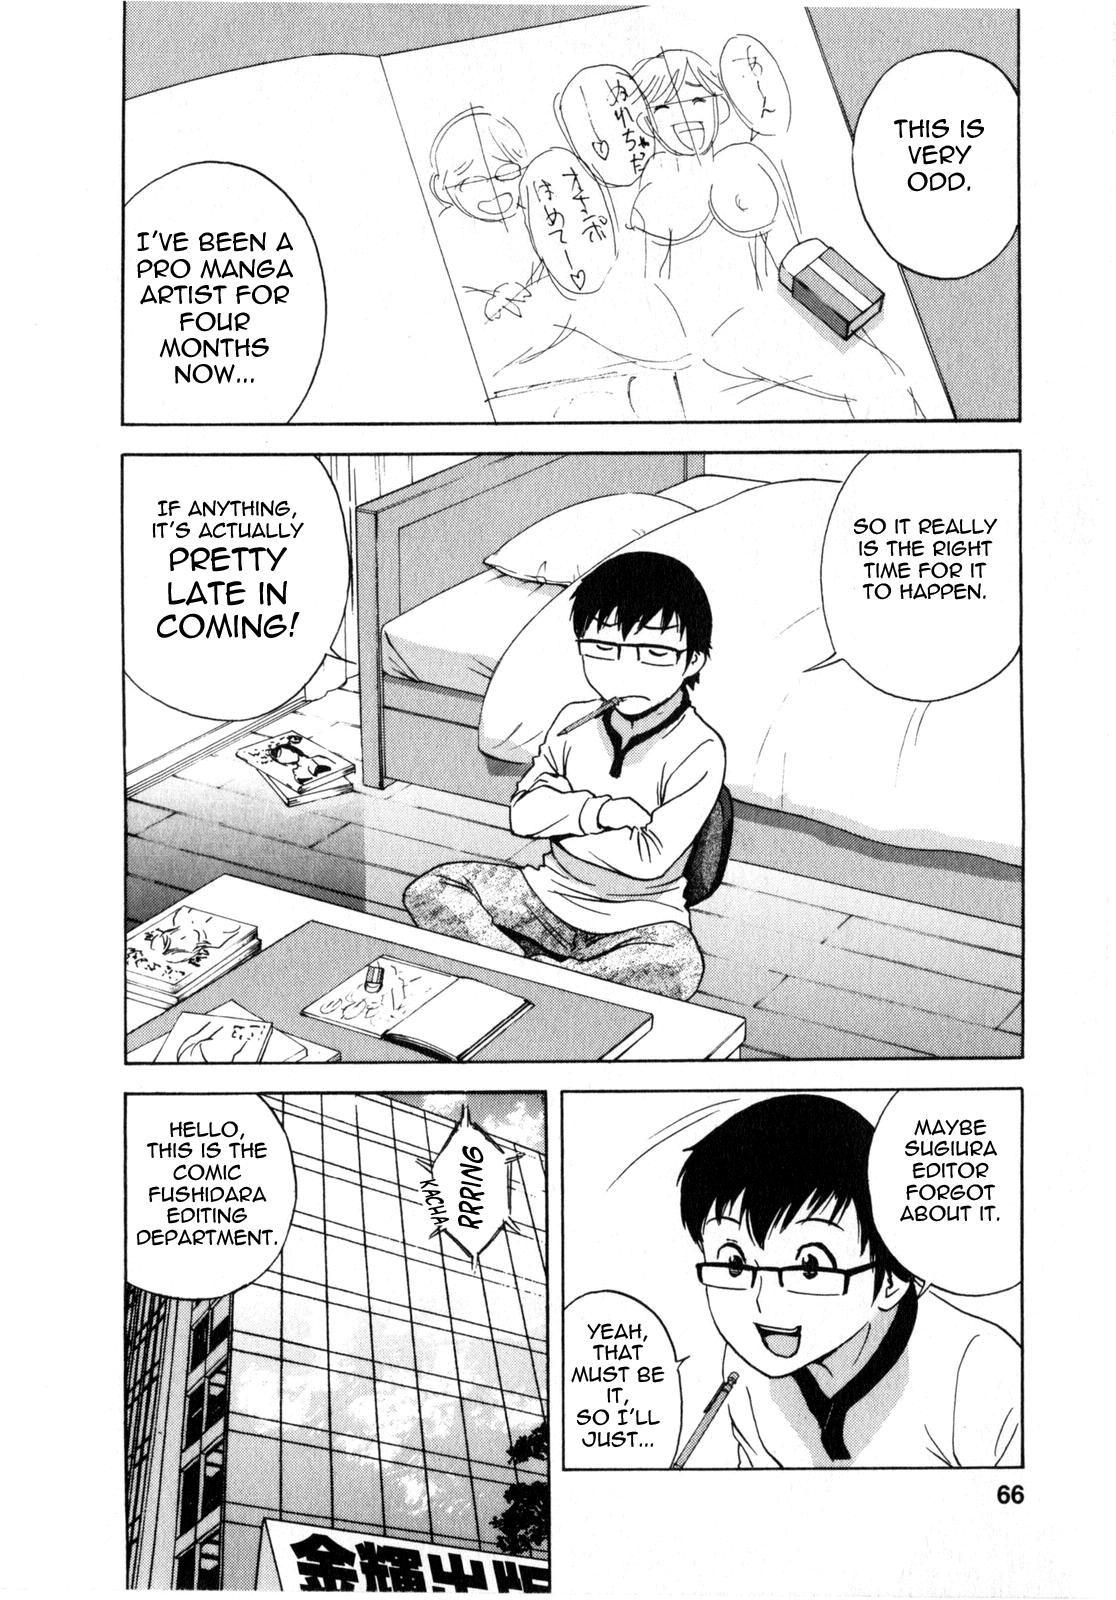 [Hidemaru] Life with Married Women Just Like a Manga 2 - Ch. 1-5 [English] {Tadanohito} 68